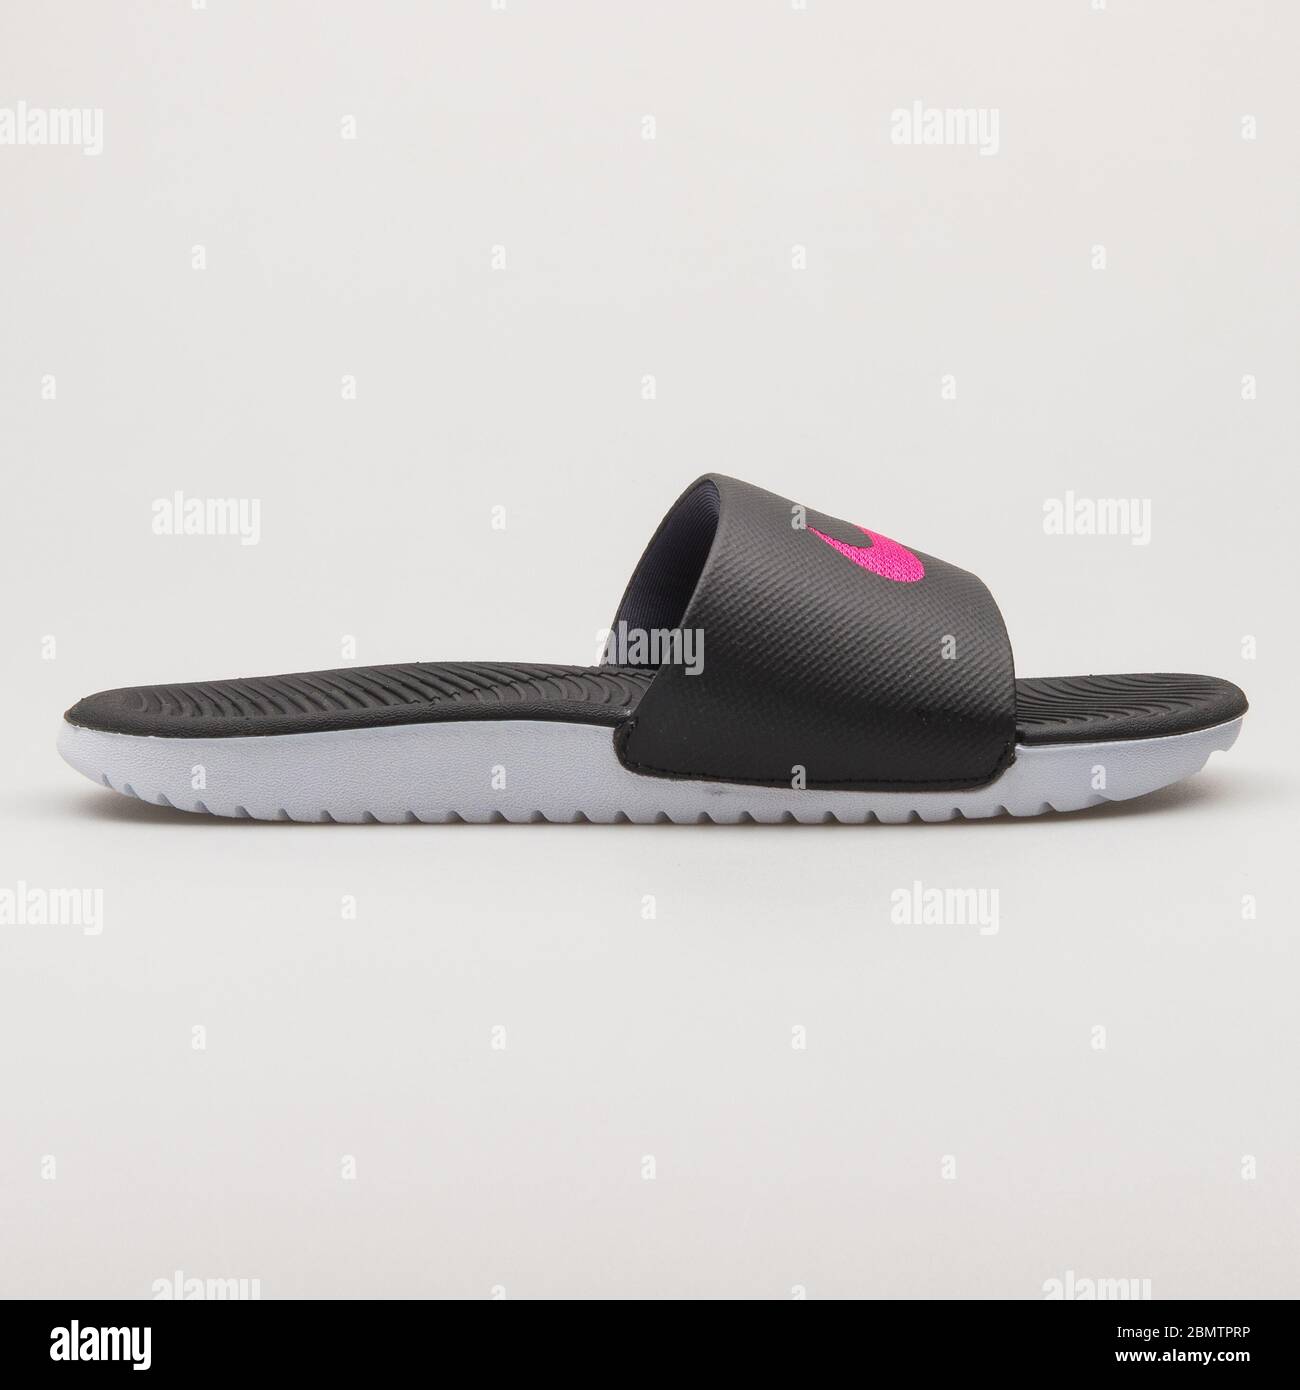 VIENNA, AUSTRIA - FEBRUARY 19, 2018: Nike Kawa Slide black, pink and white sandal on white background. Stock Photo